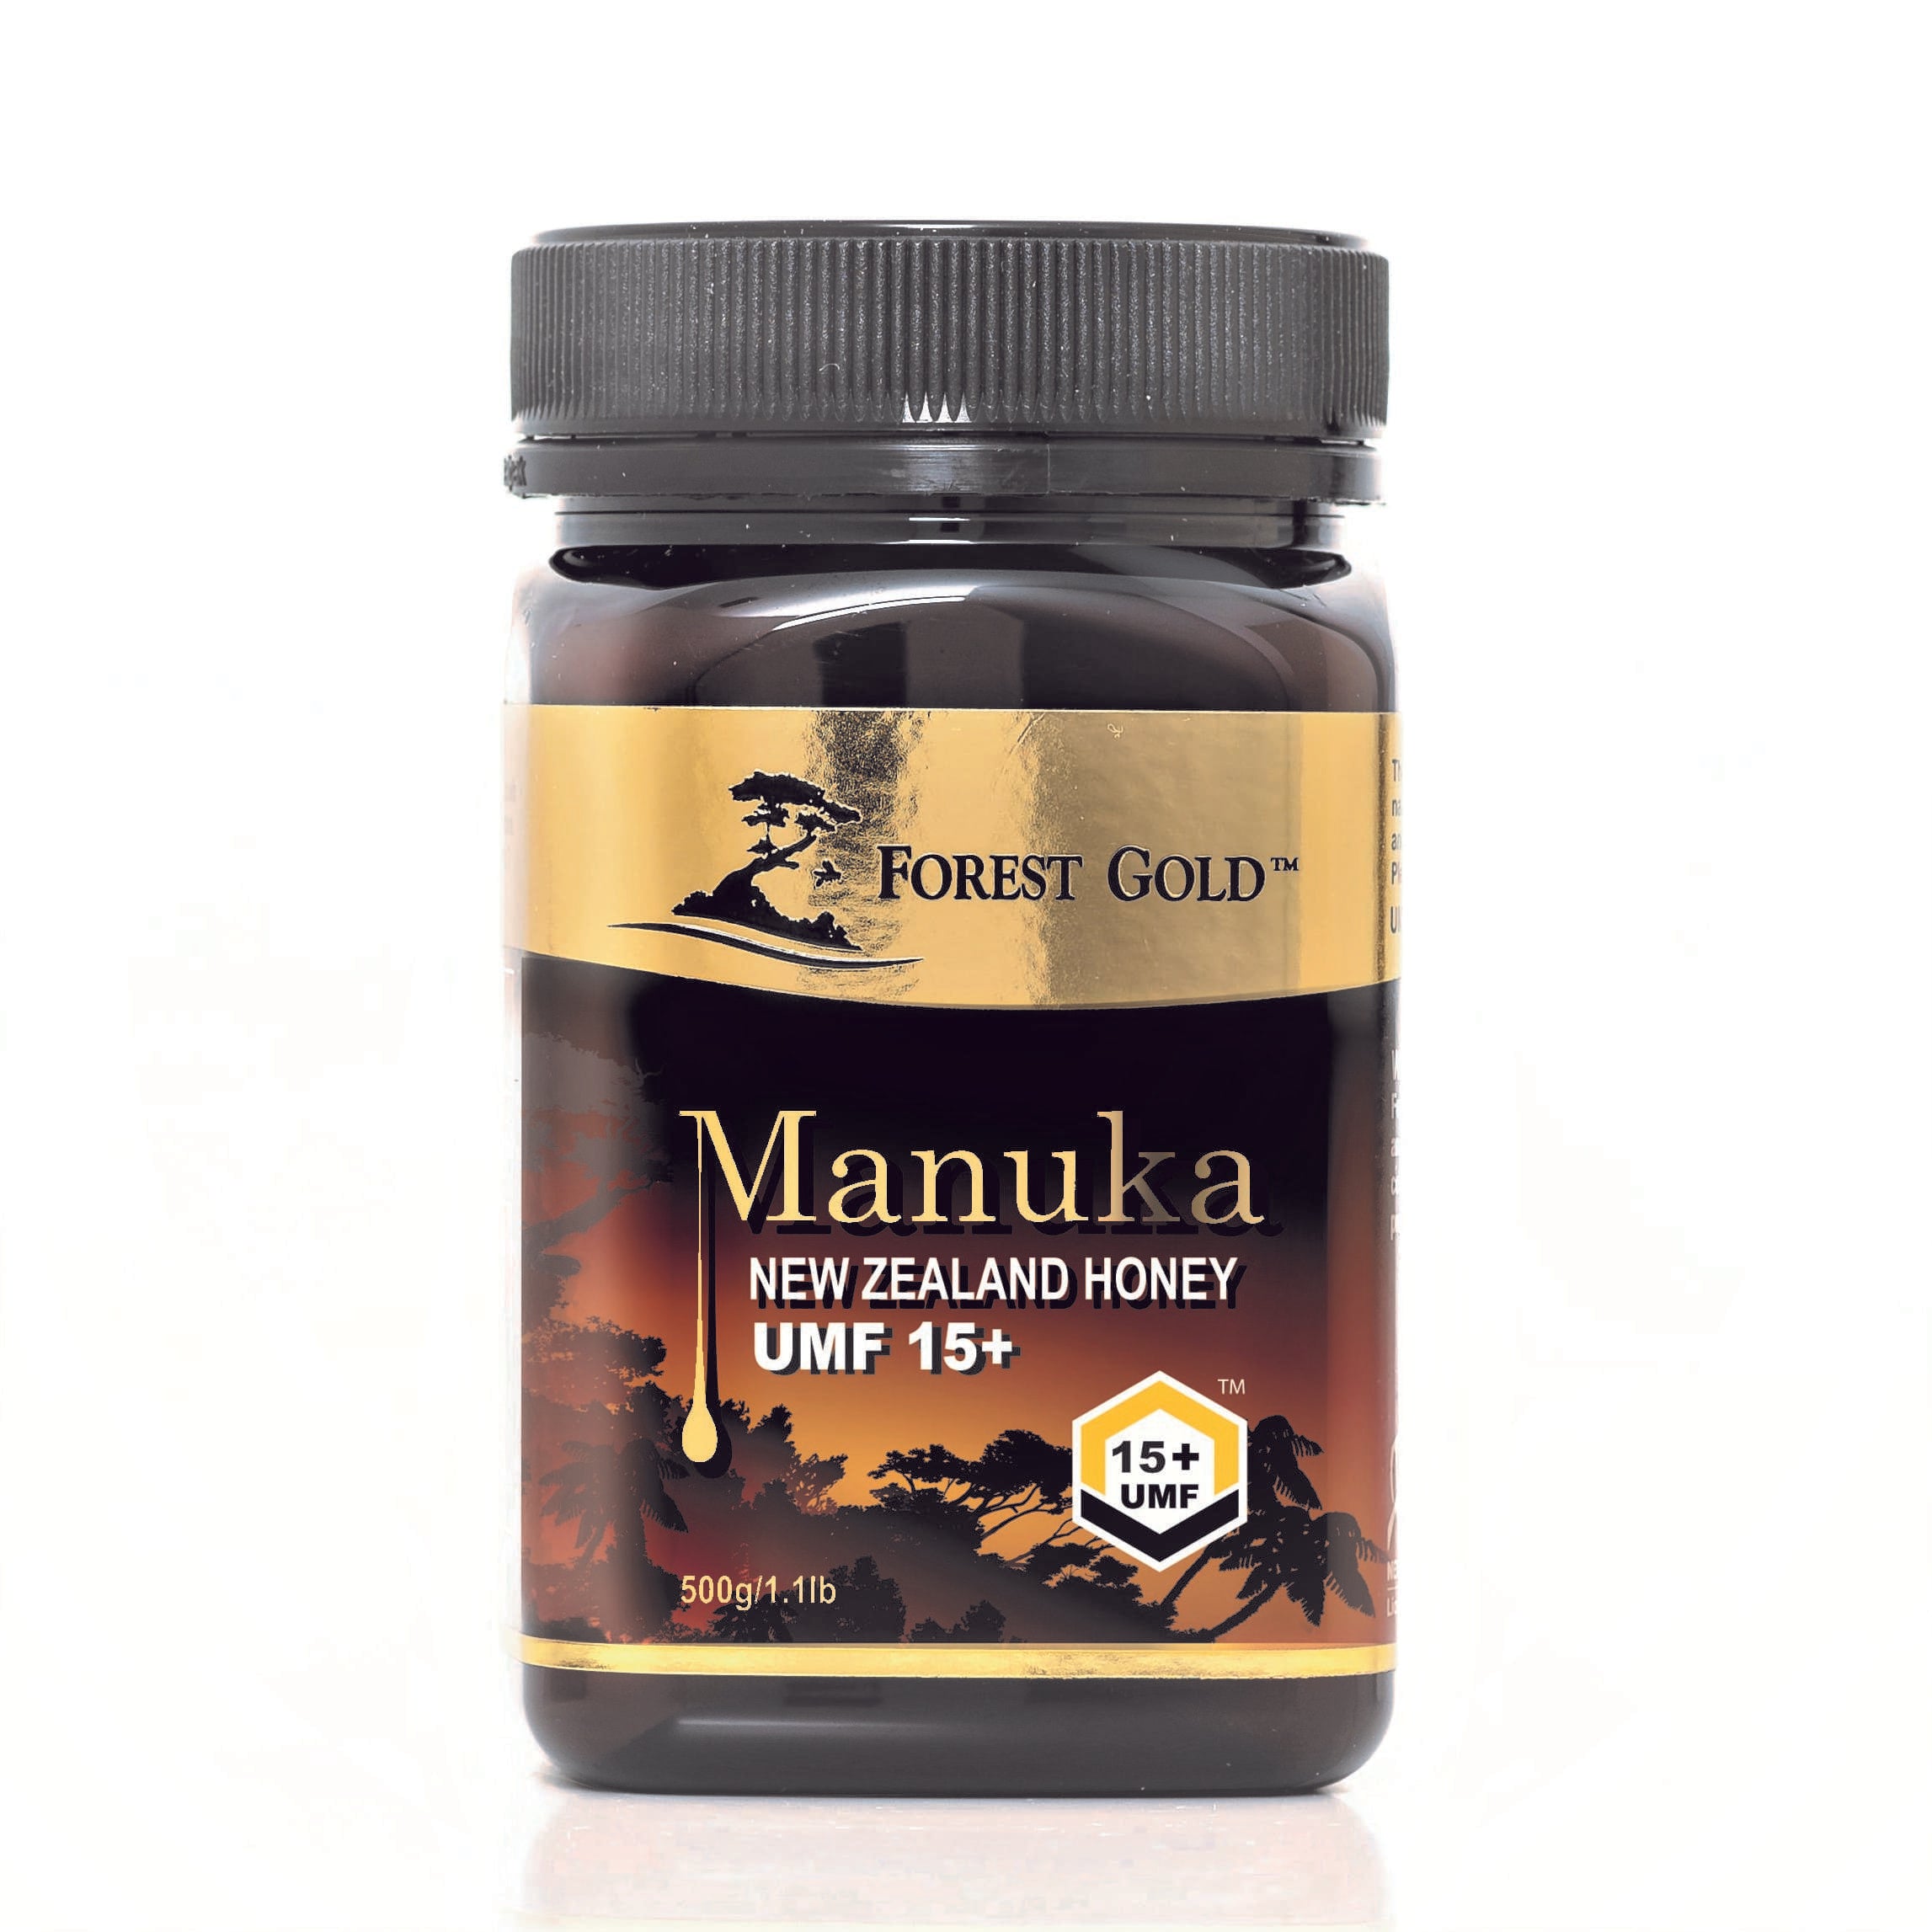 Forest Gold Manuka UMF 15+ Certified NZ Honey- 500g Manuka Honey Organichub   